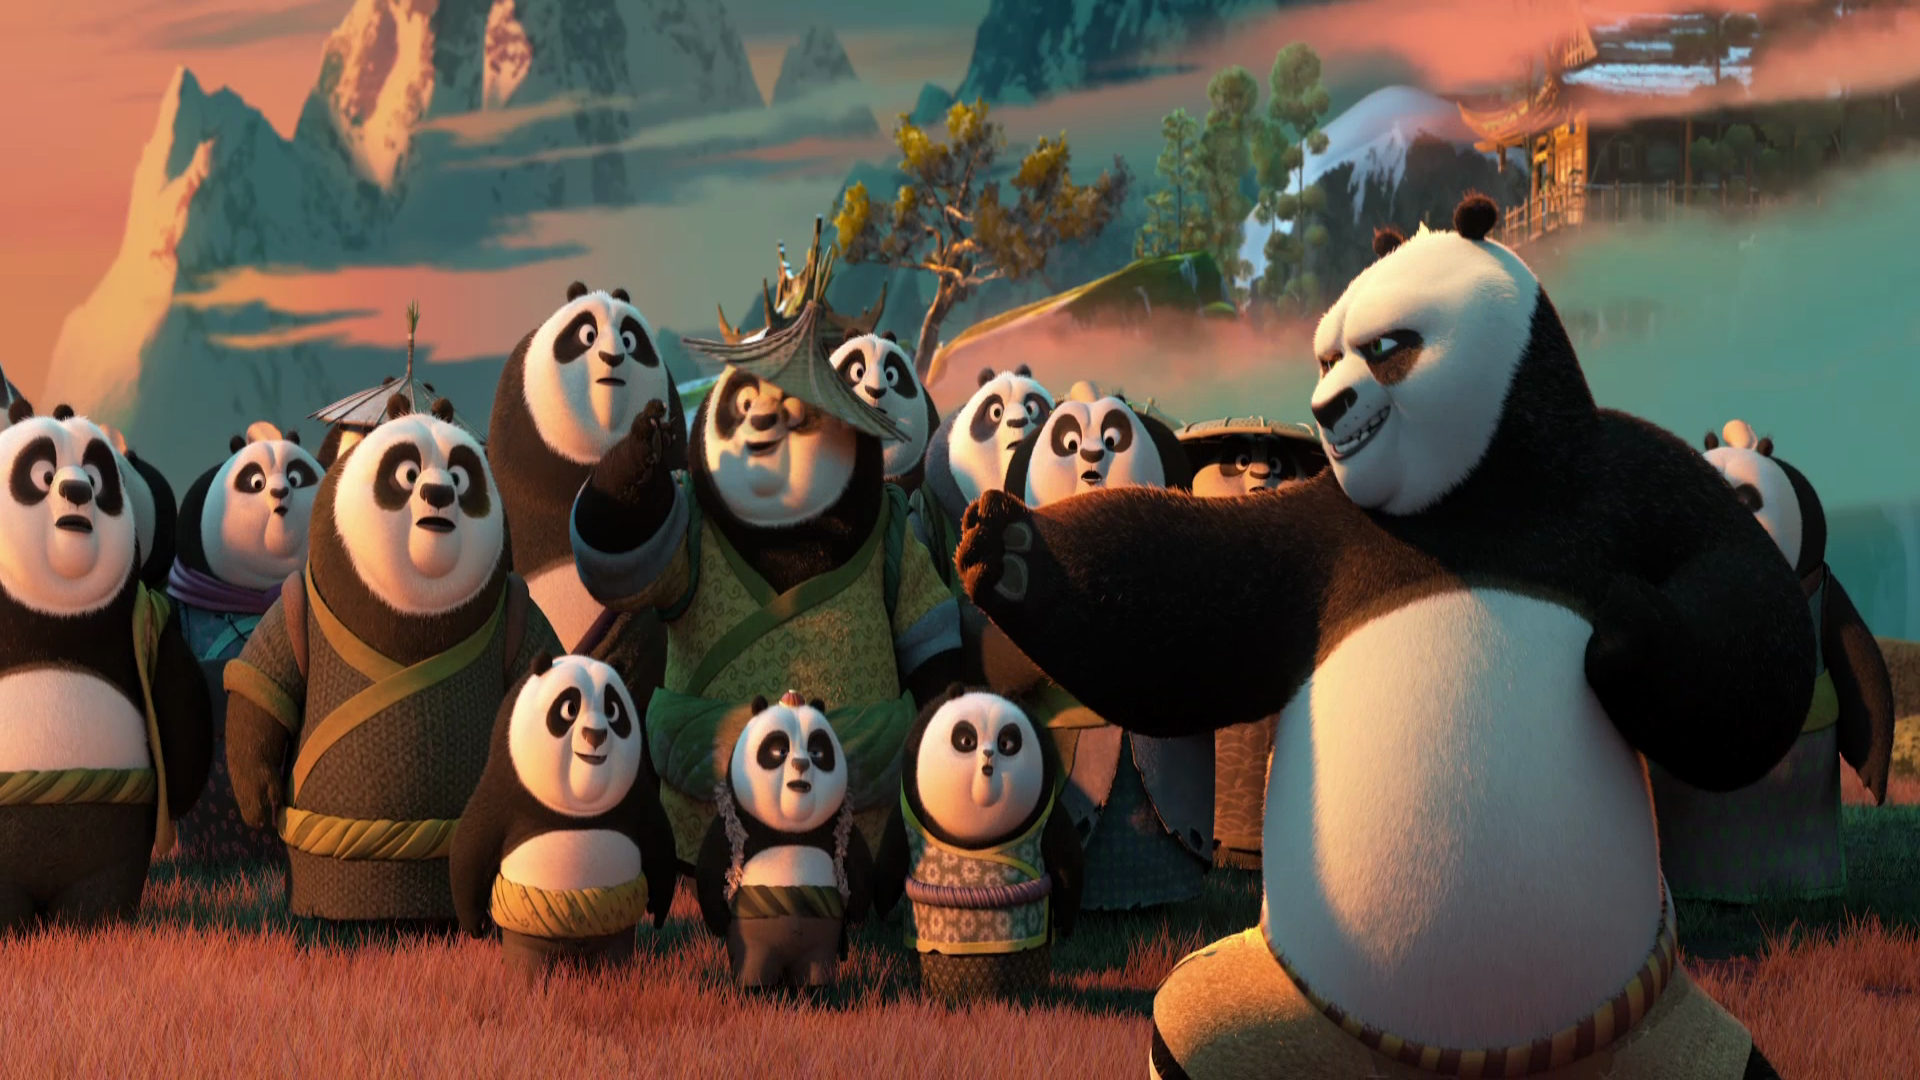 Kungfu panda 3